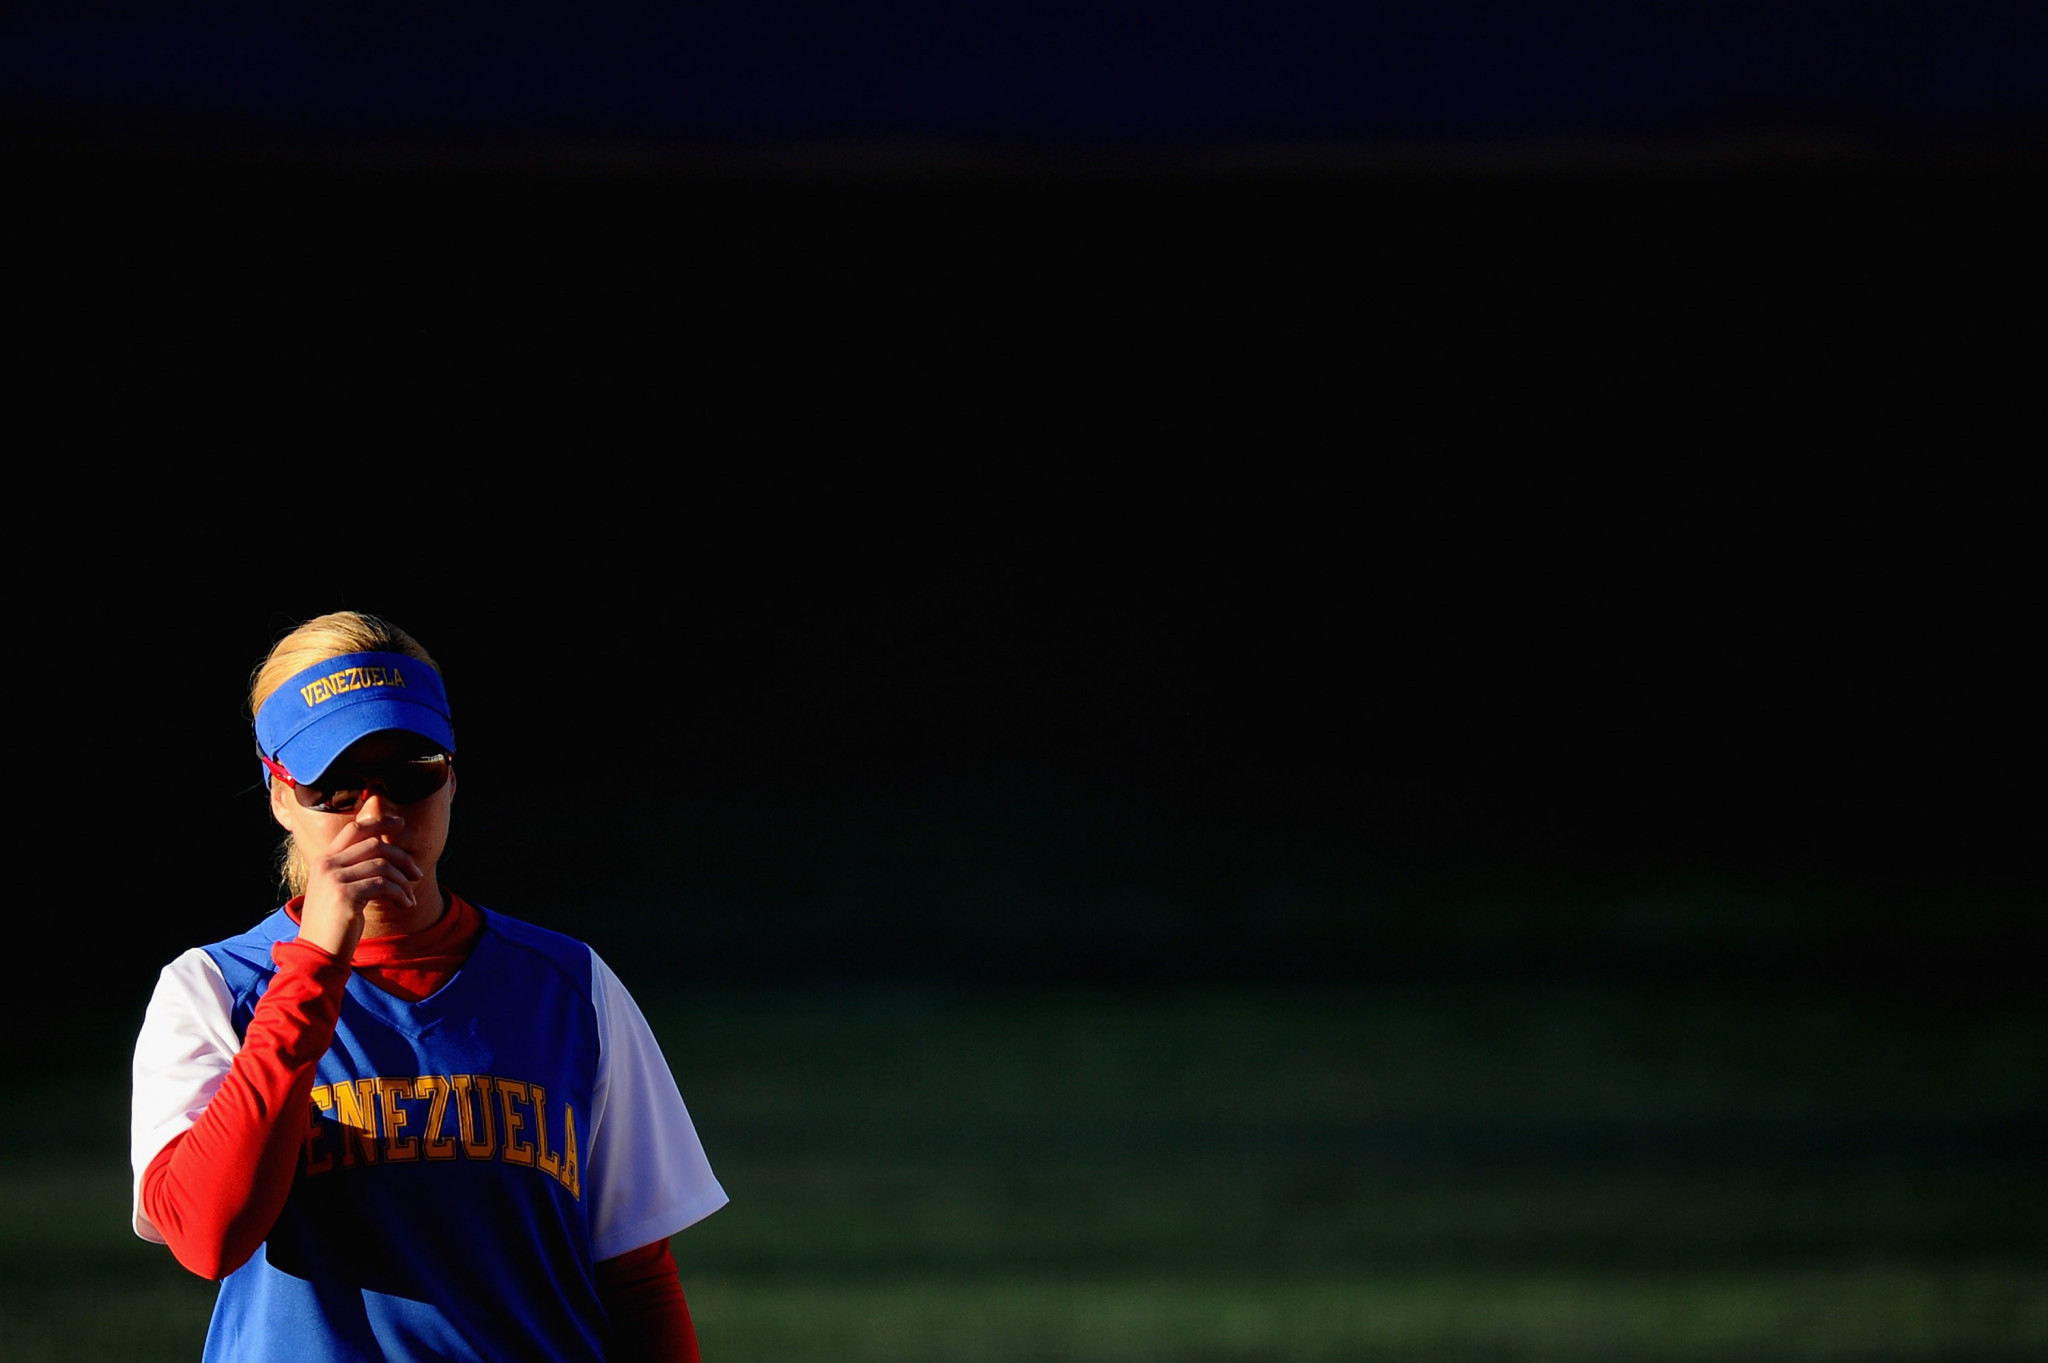 Yuruby Alicart is set to return to the Venezuelan women's softball team ©Getty Images